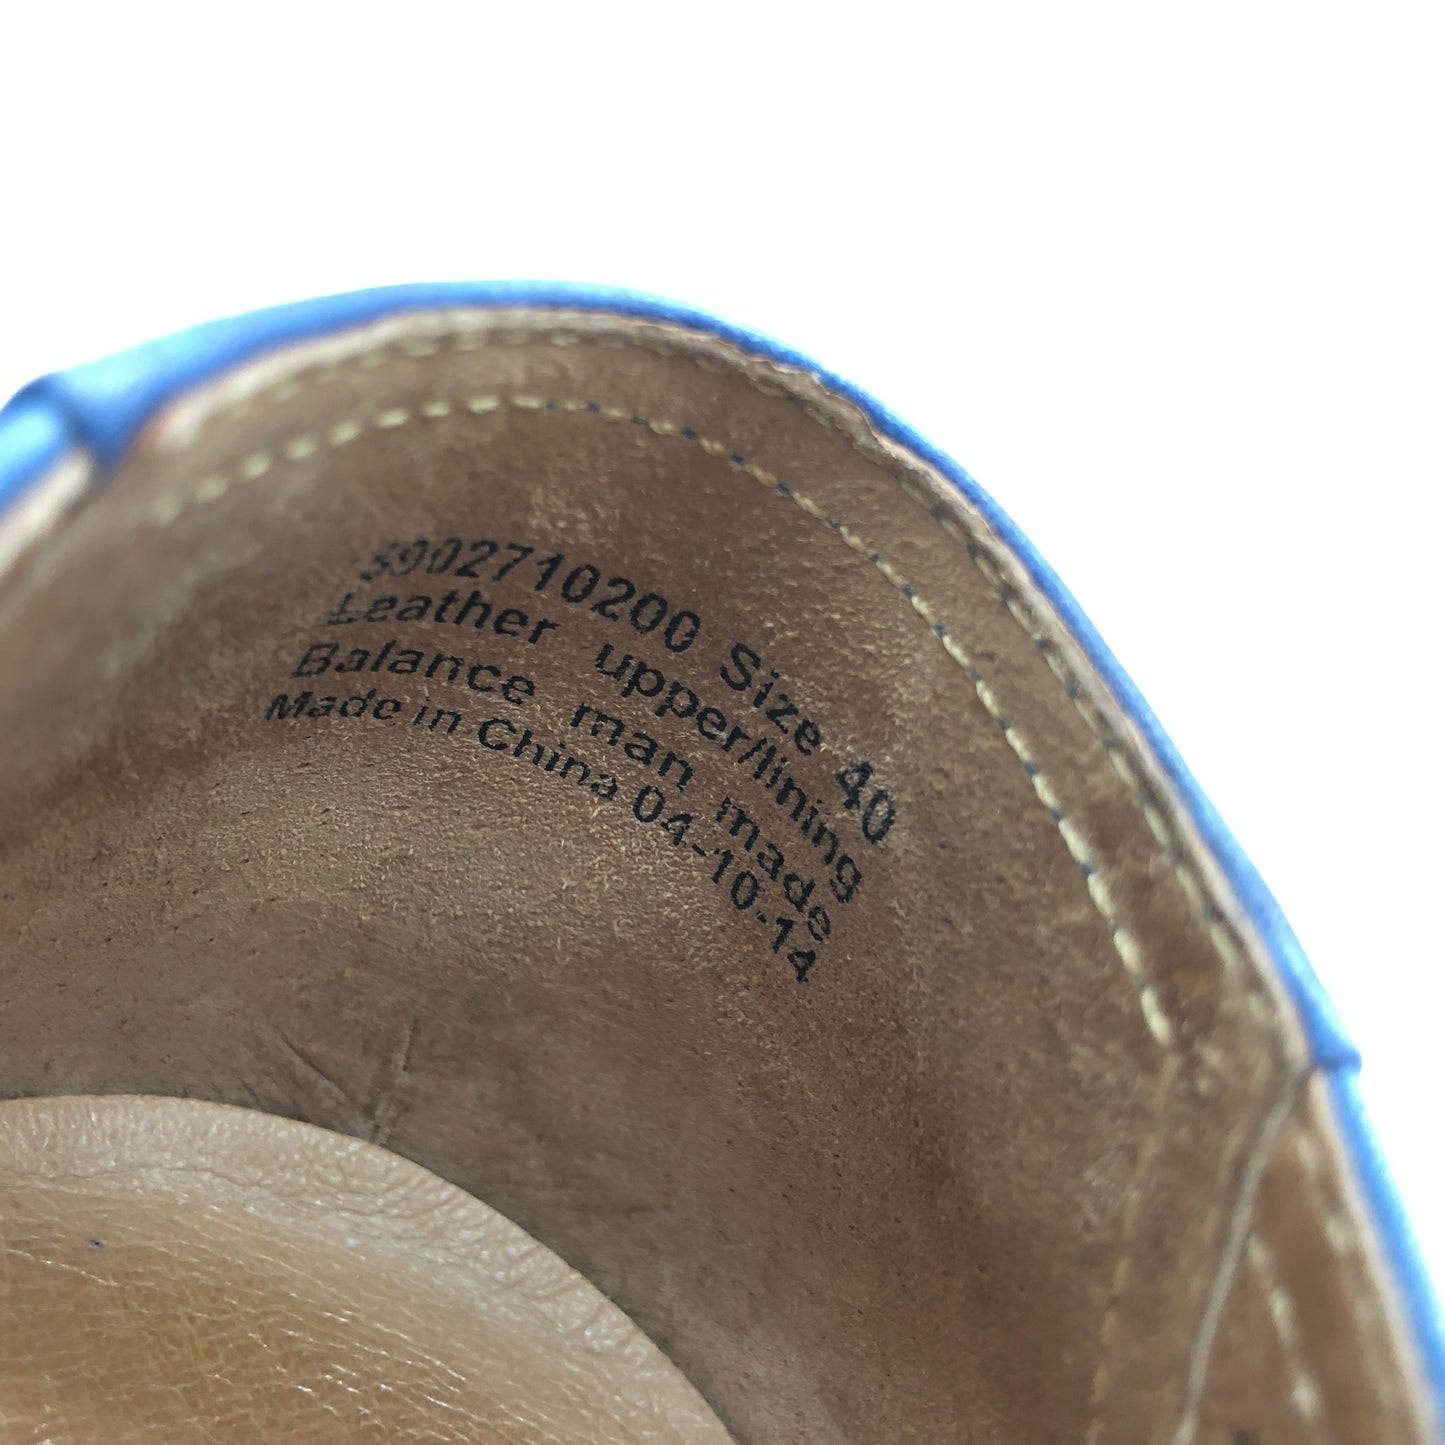 Blue Shoes Flats Dansko, Size 10 | 40